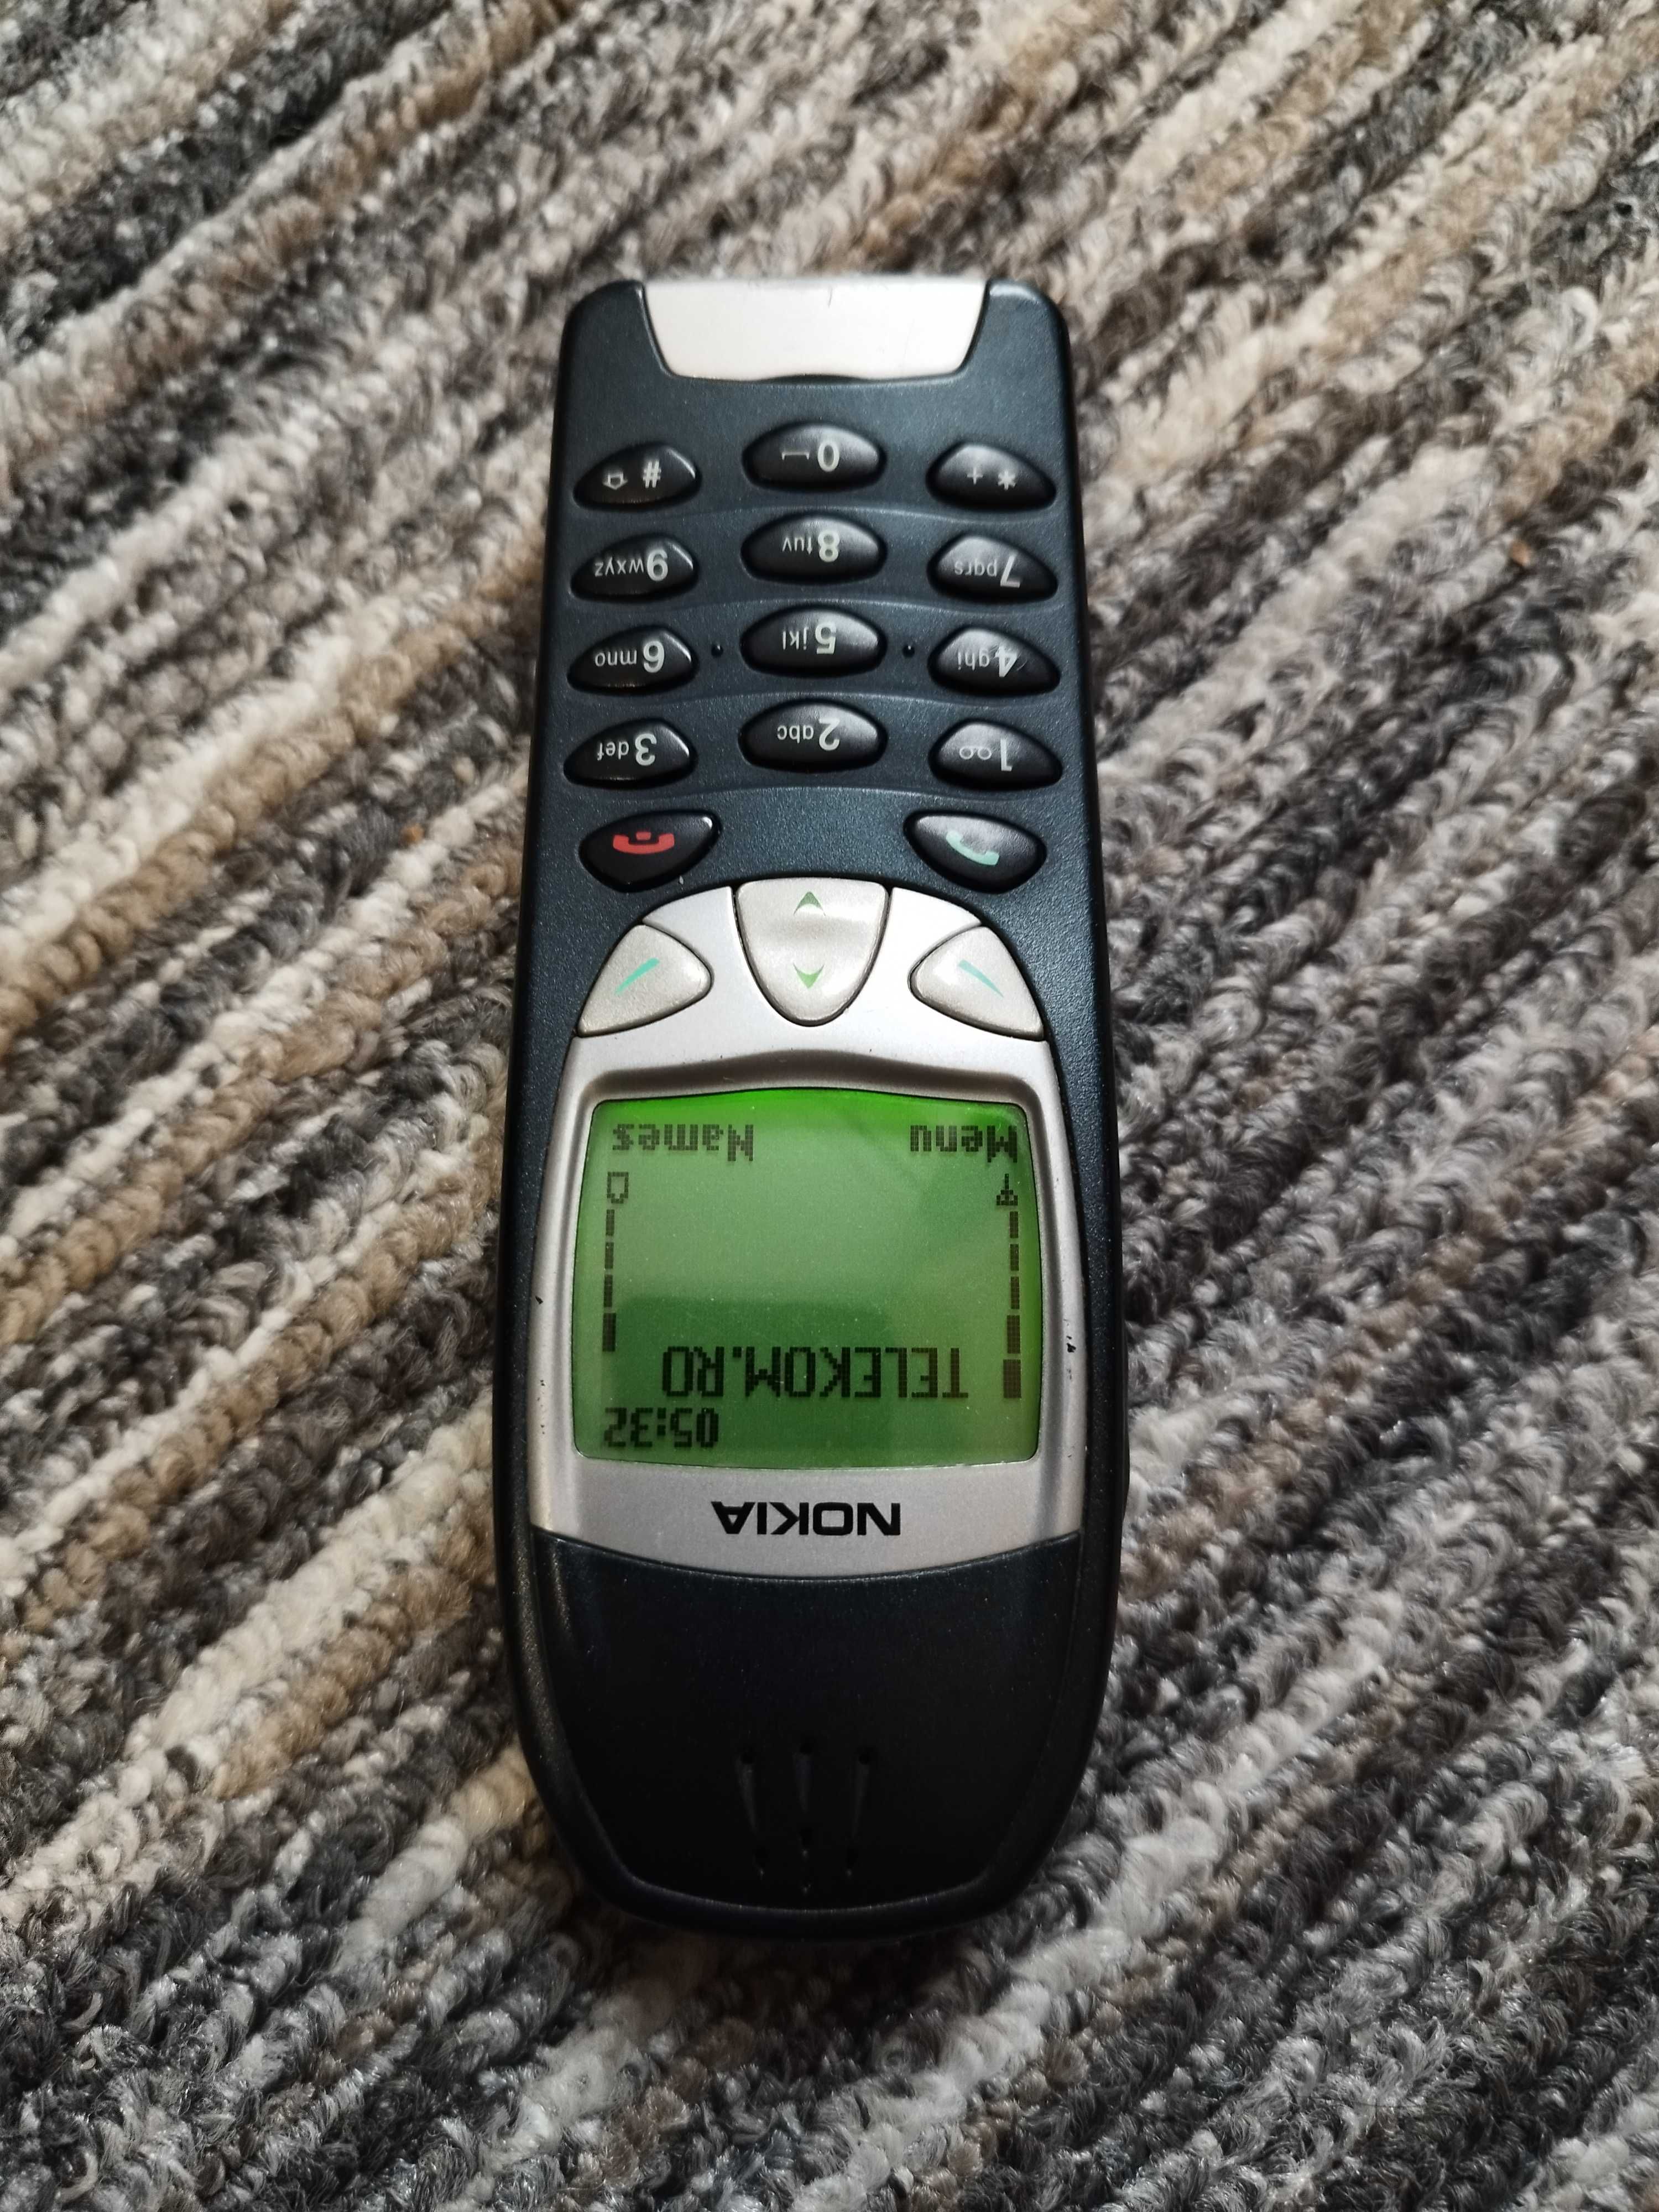 Nokia 6210 - foarte bine intretinut